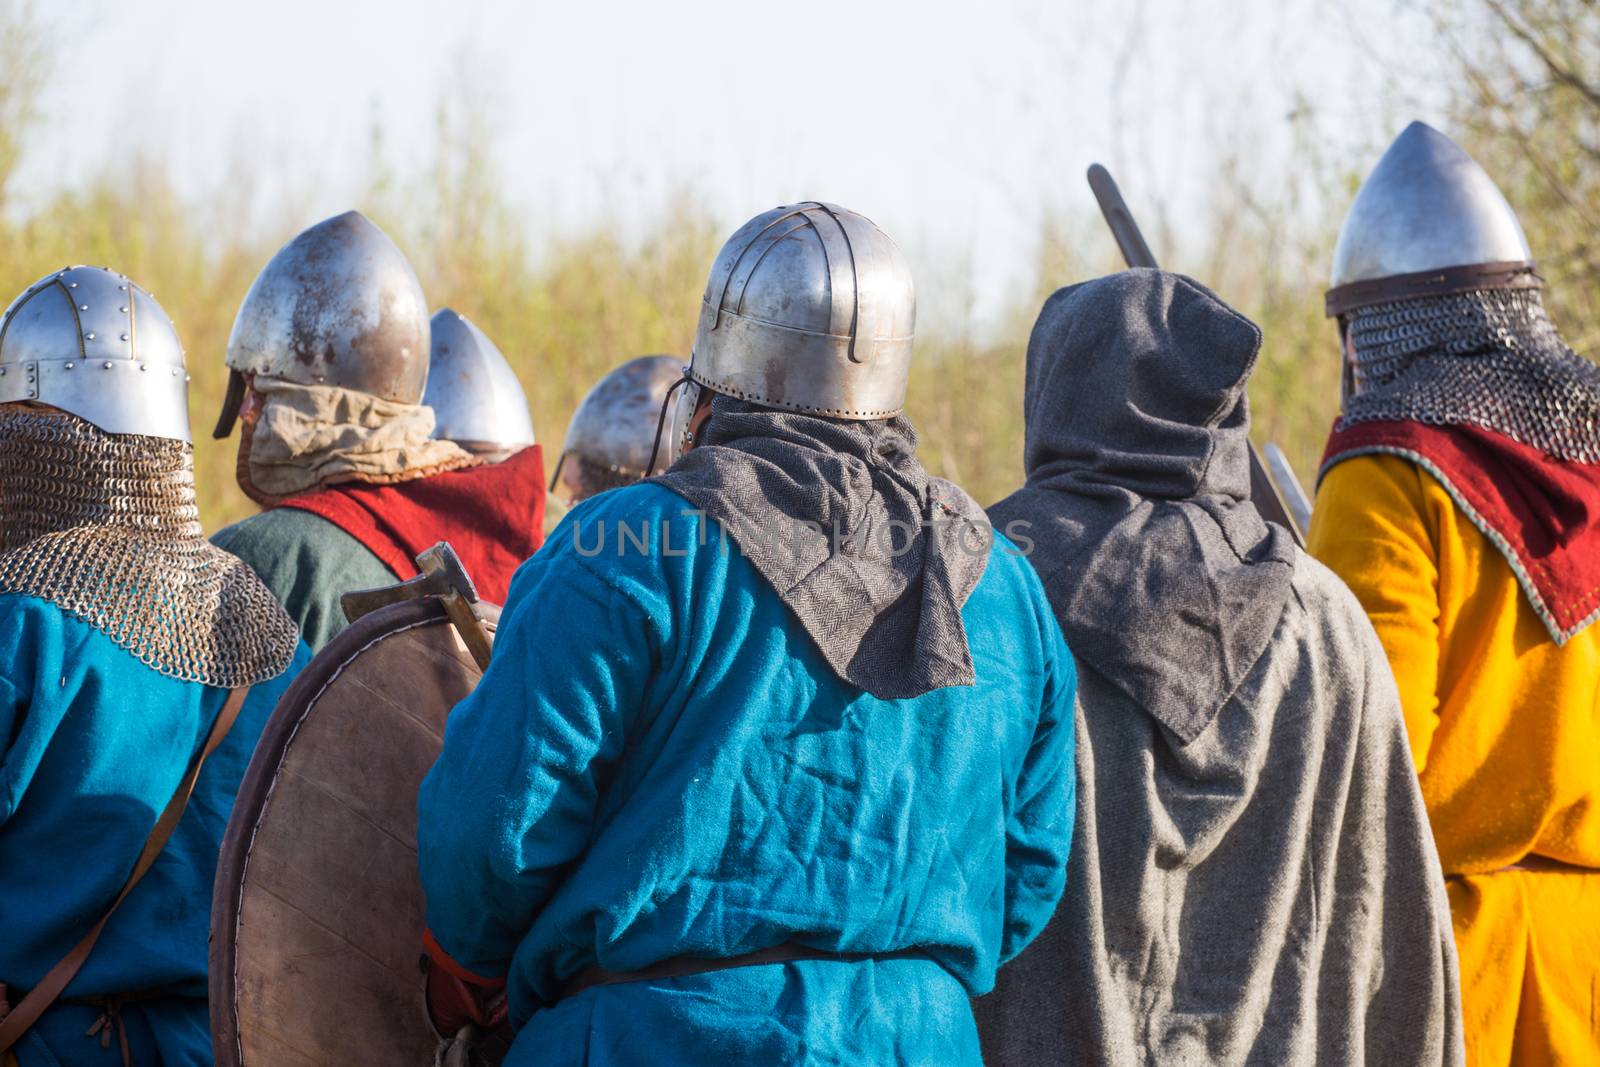 Slav warriors in reenactment battle by destillat